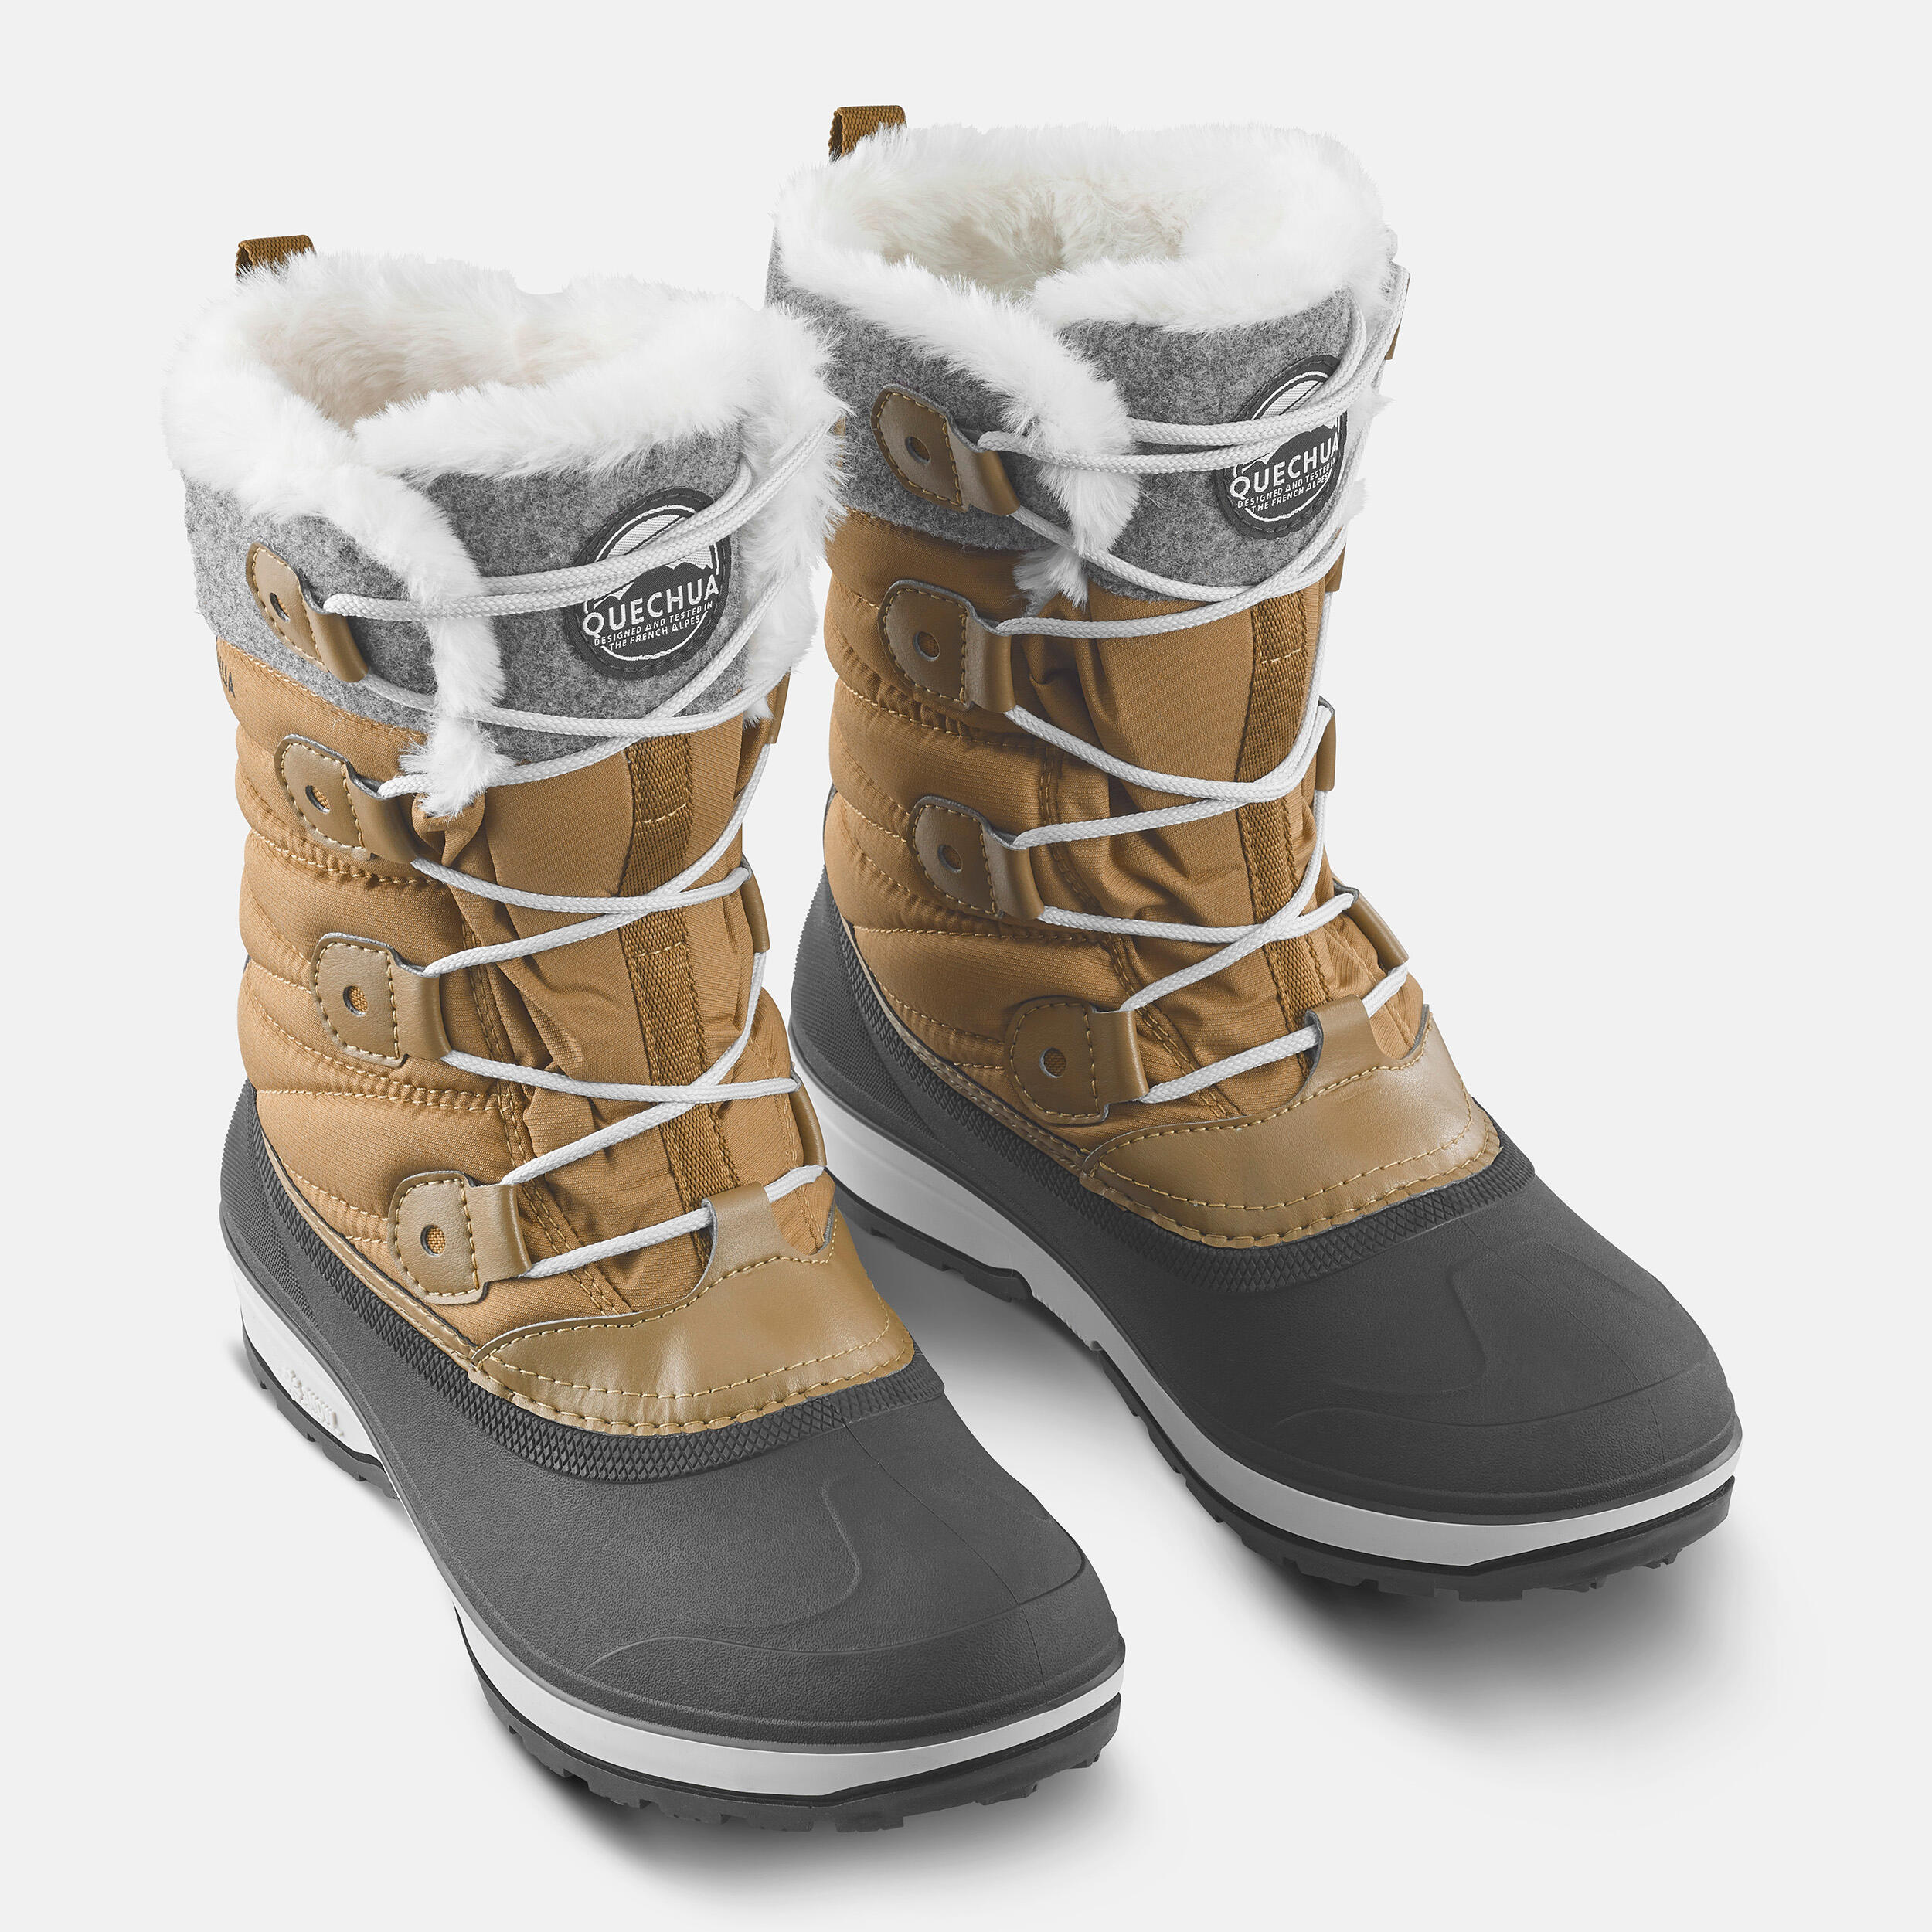 Women's waterproof warm snow boots - SH500 high boot  4/8